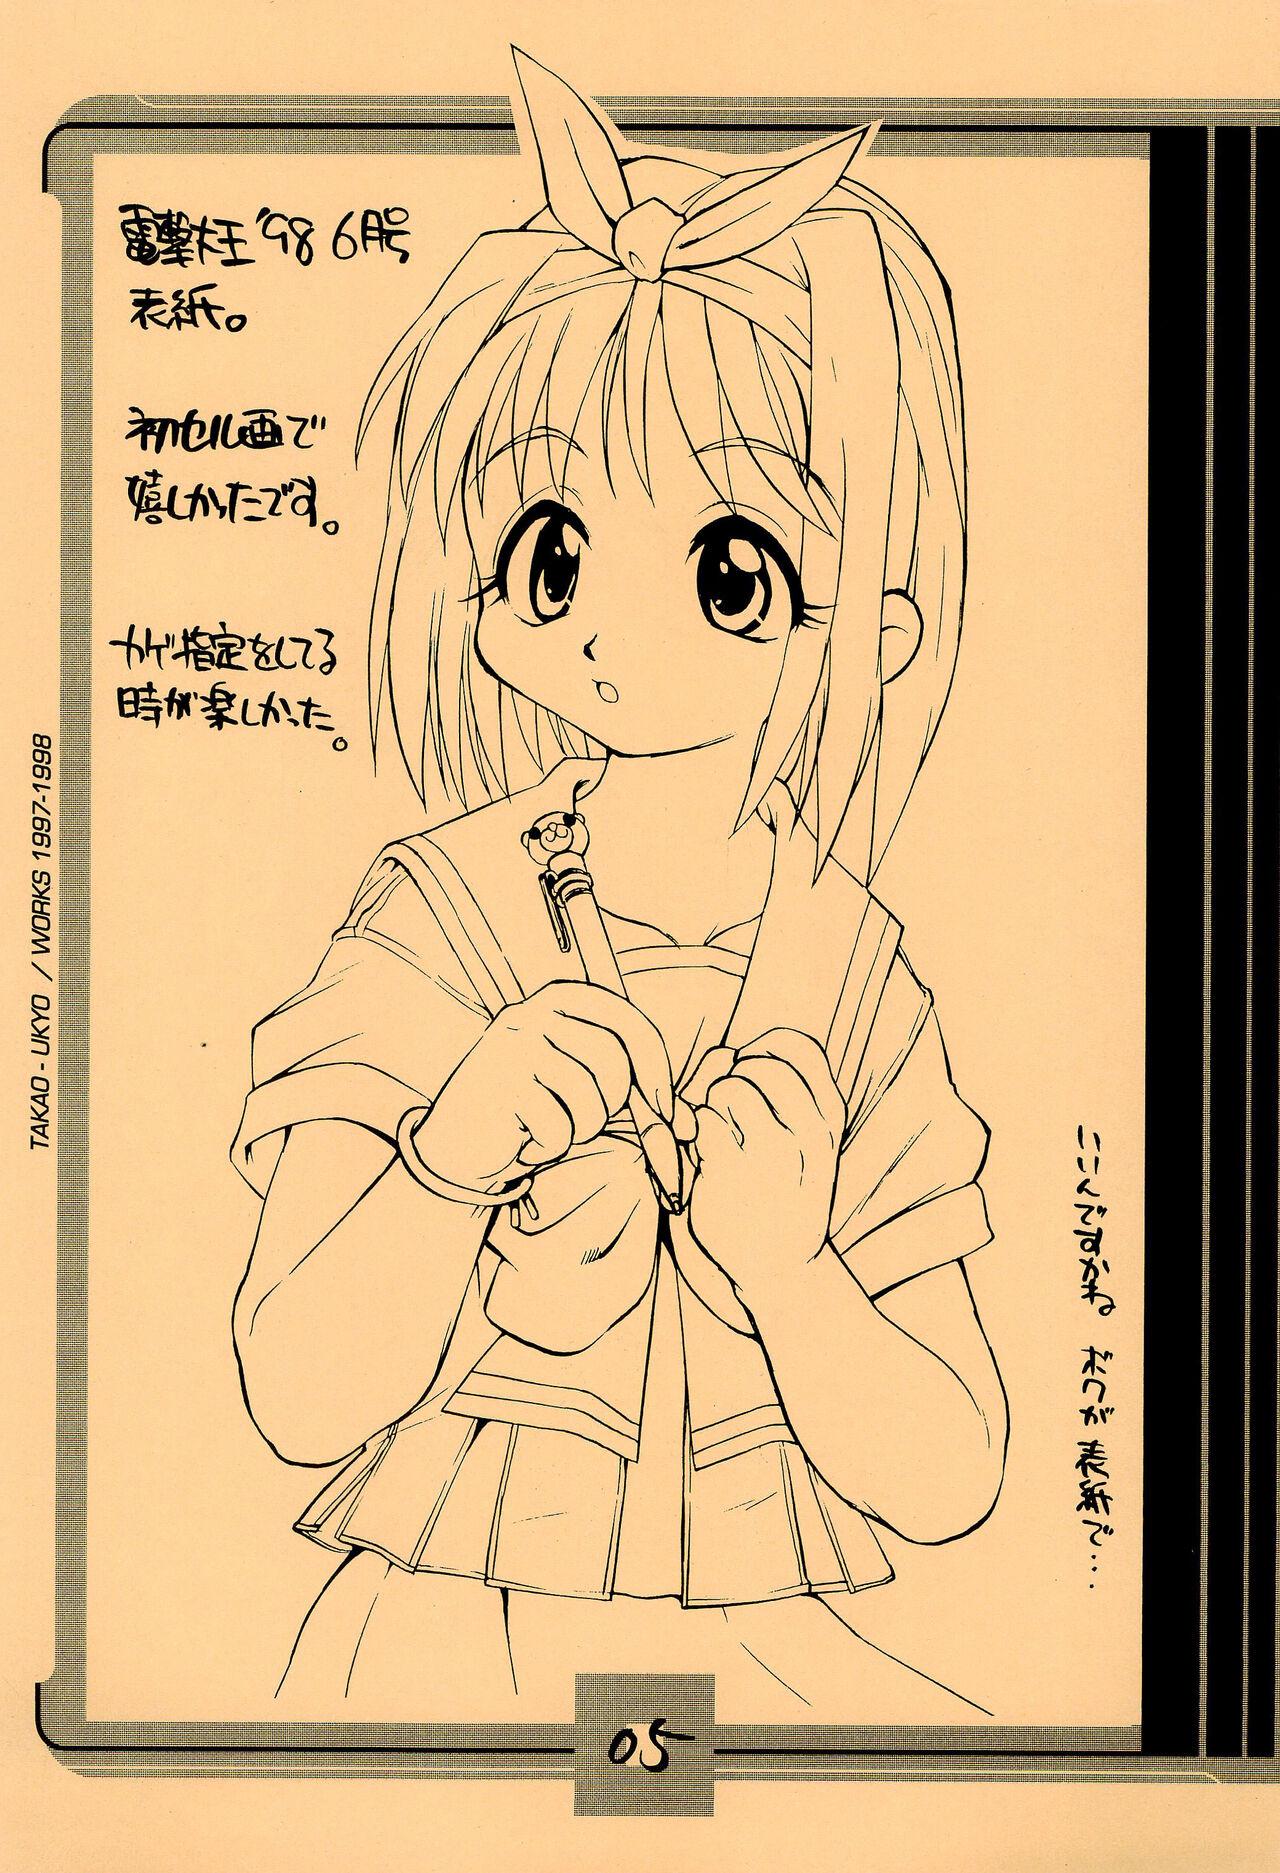 Creampies Mamagult Katsudou Houkokusho Hikae 1997/11-1998/08 - To heart Fun fun pharmacy 10 carat torte Pawg - Page 5